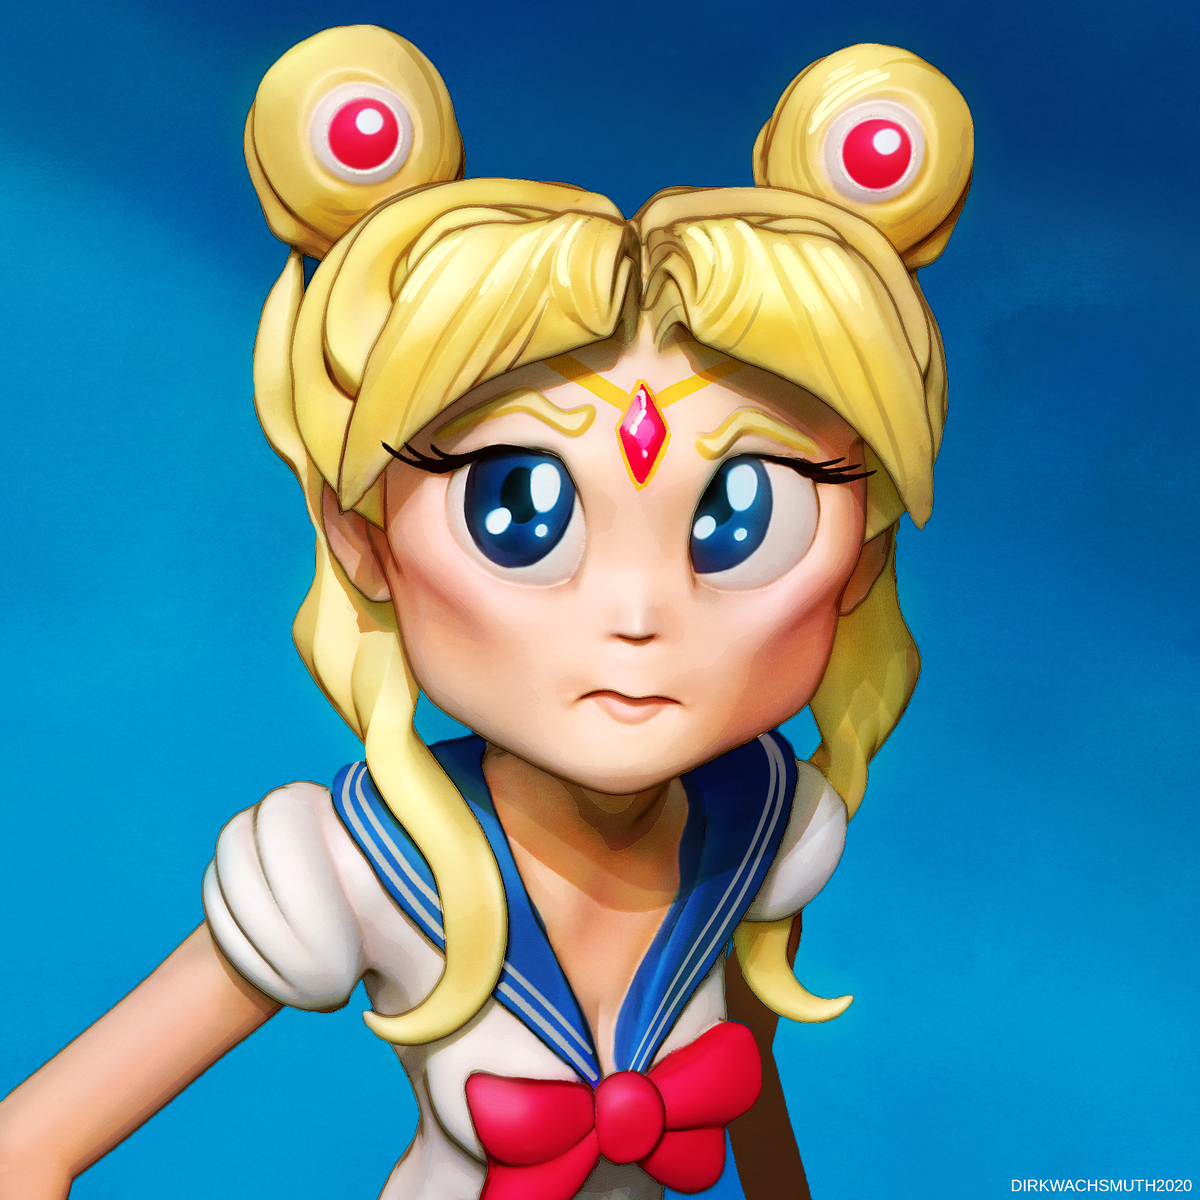 Sailormoon_compo_comicstyle_4web